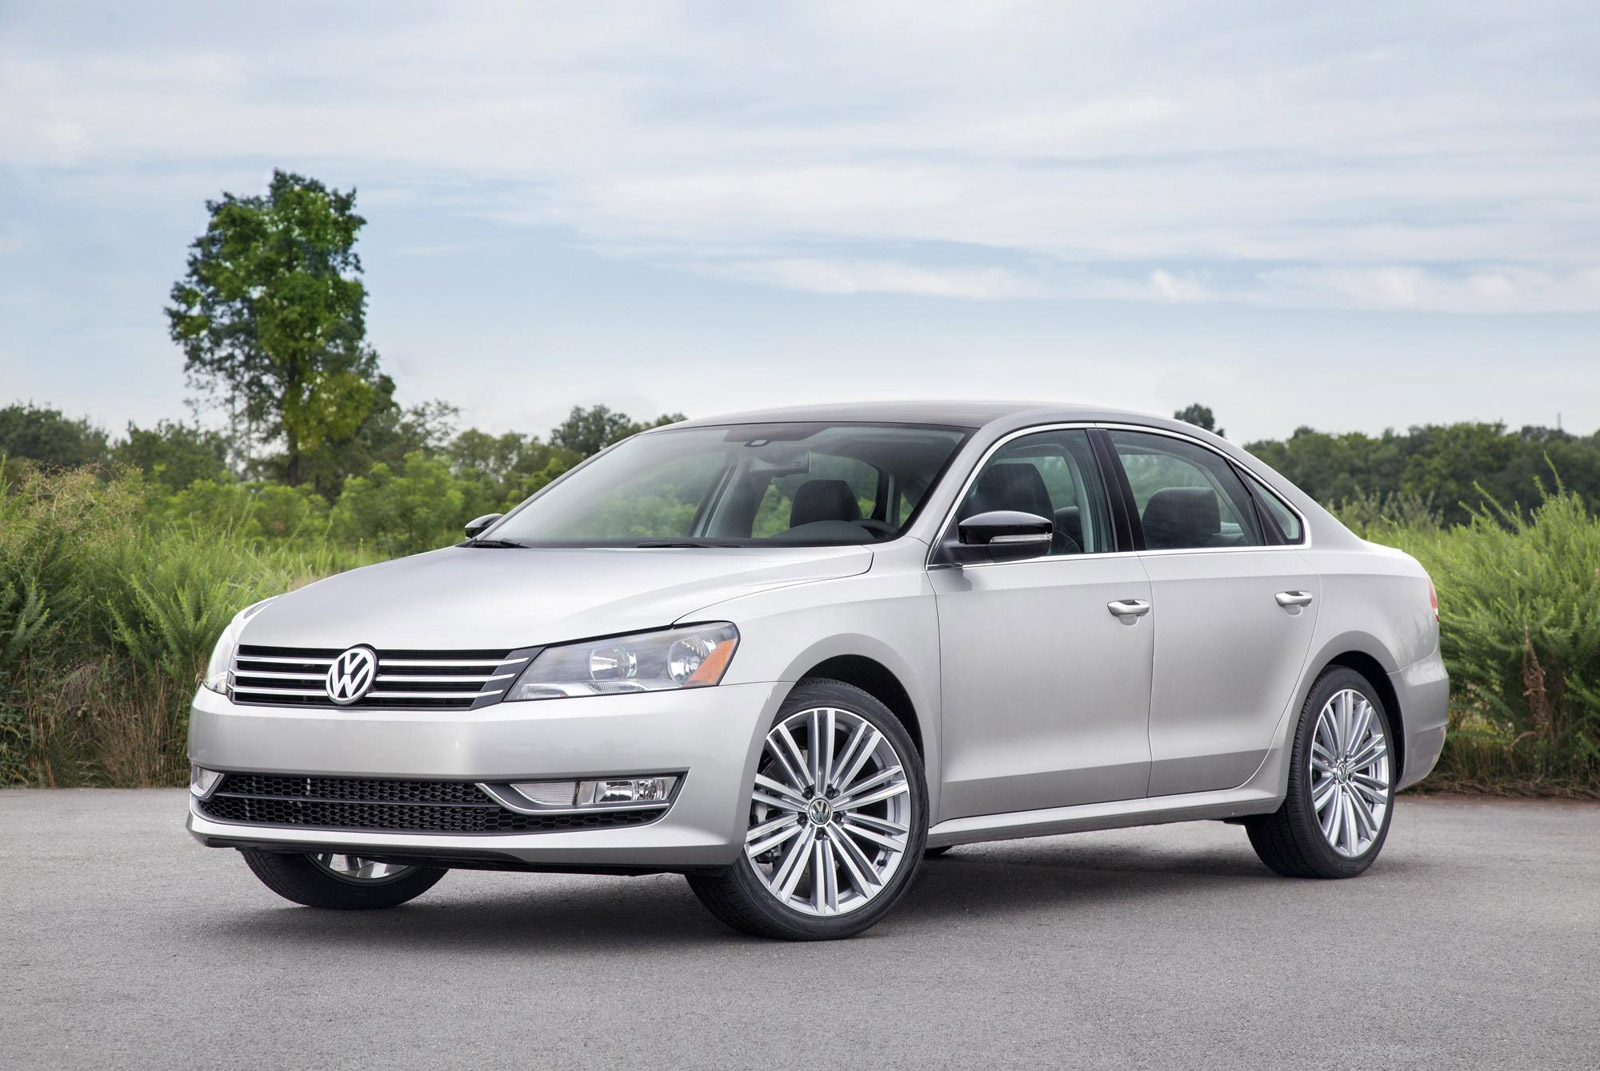 2014 Volkswagen Sport Priced From $27,295